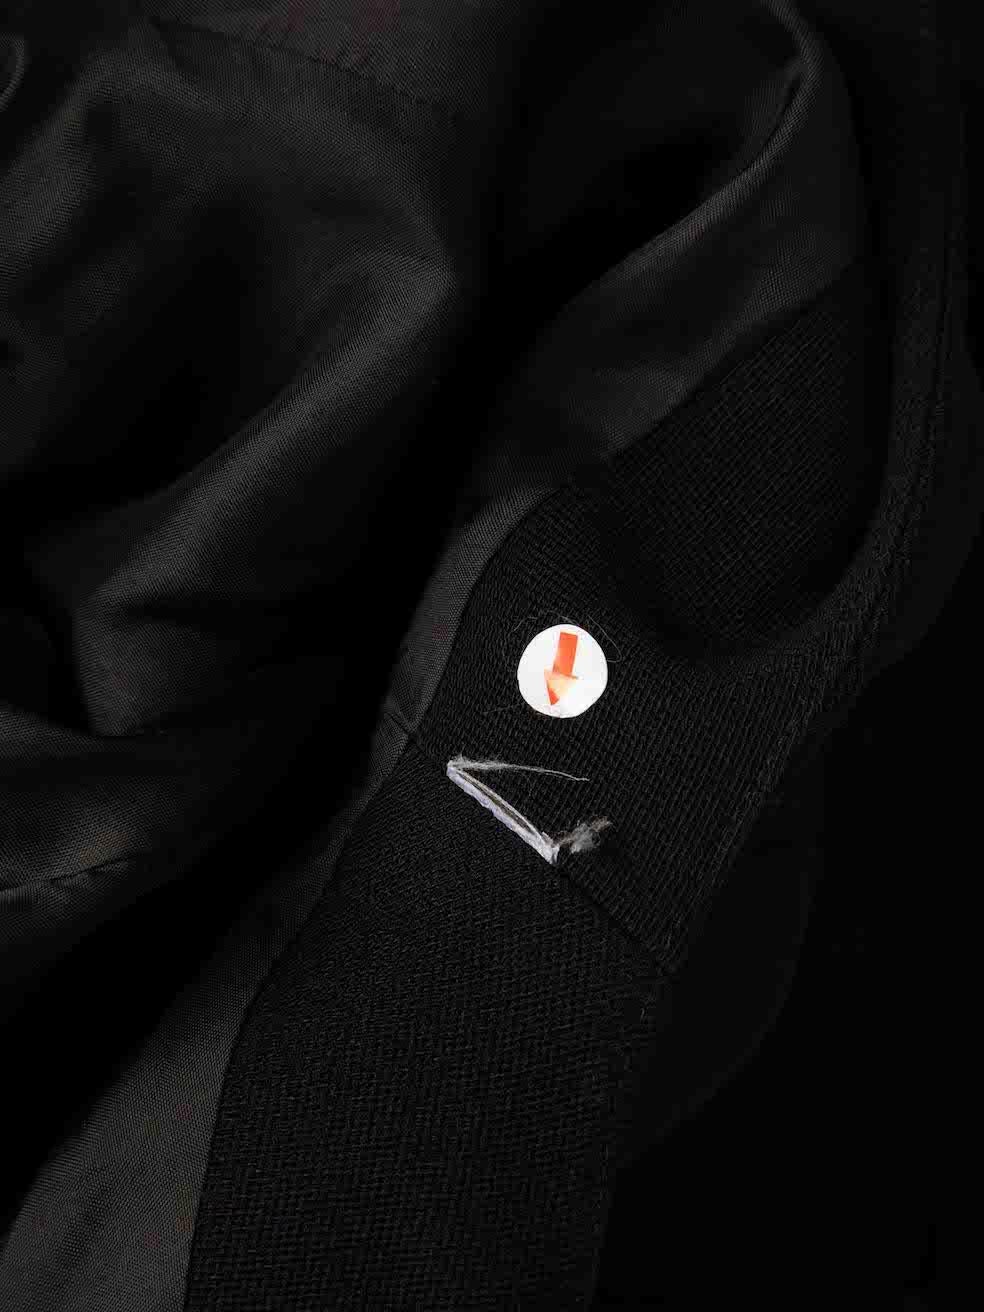 Women's Moschino Moschino Cheap & Chic Black Chain Detail Jacket Size S